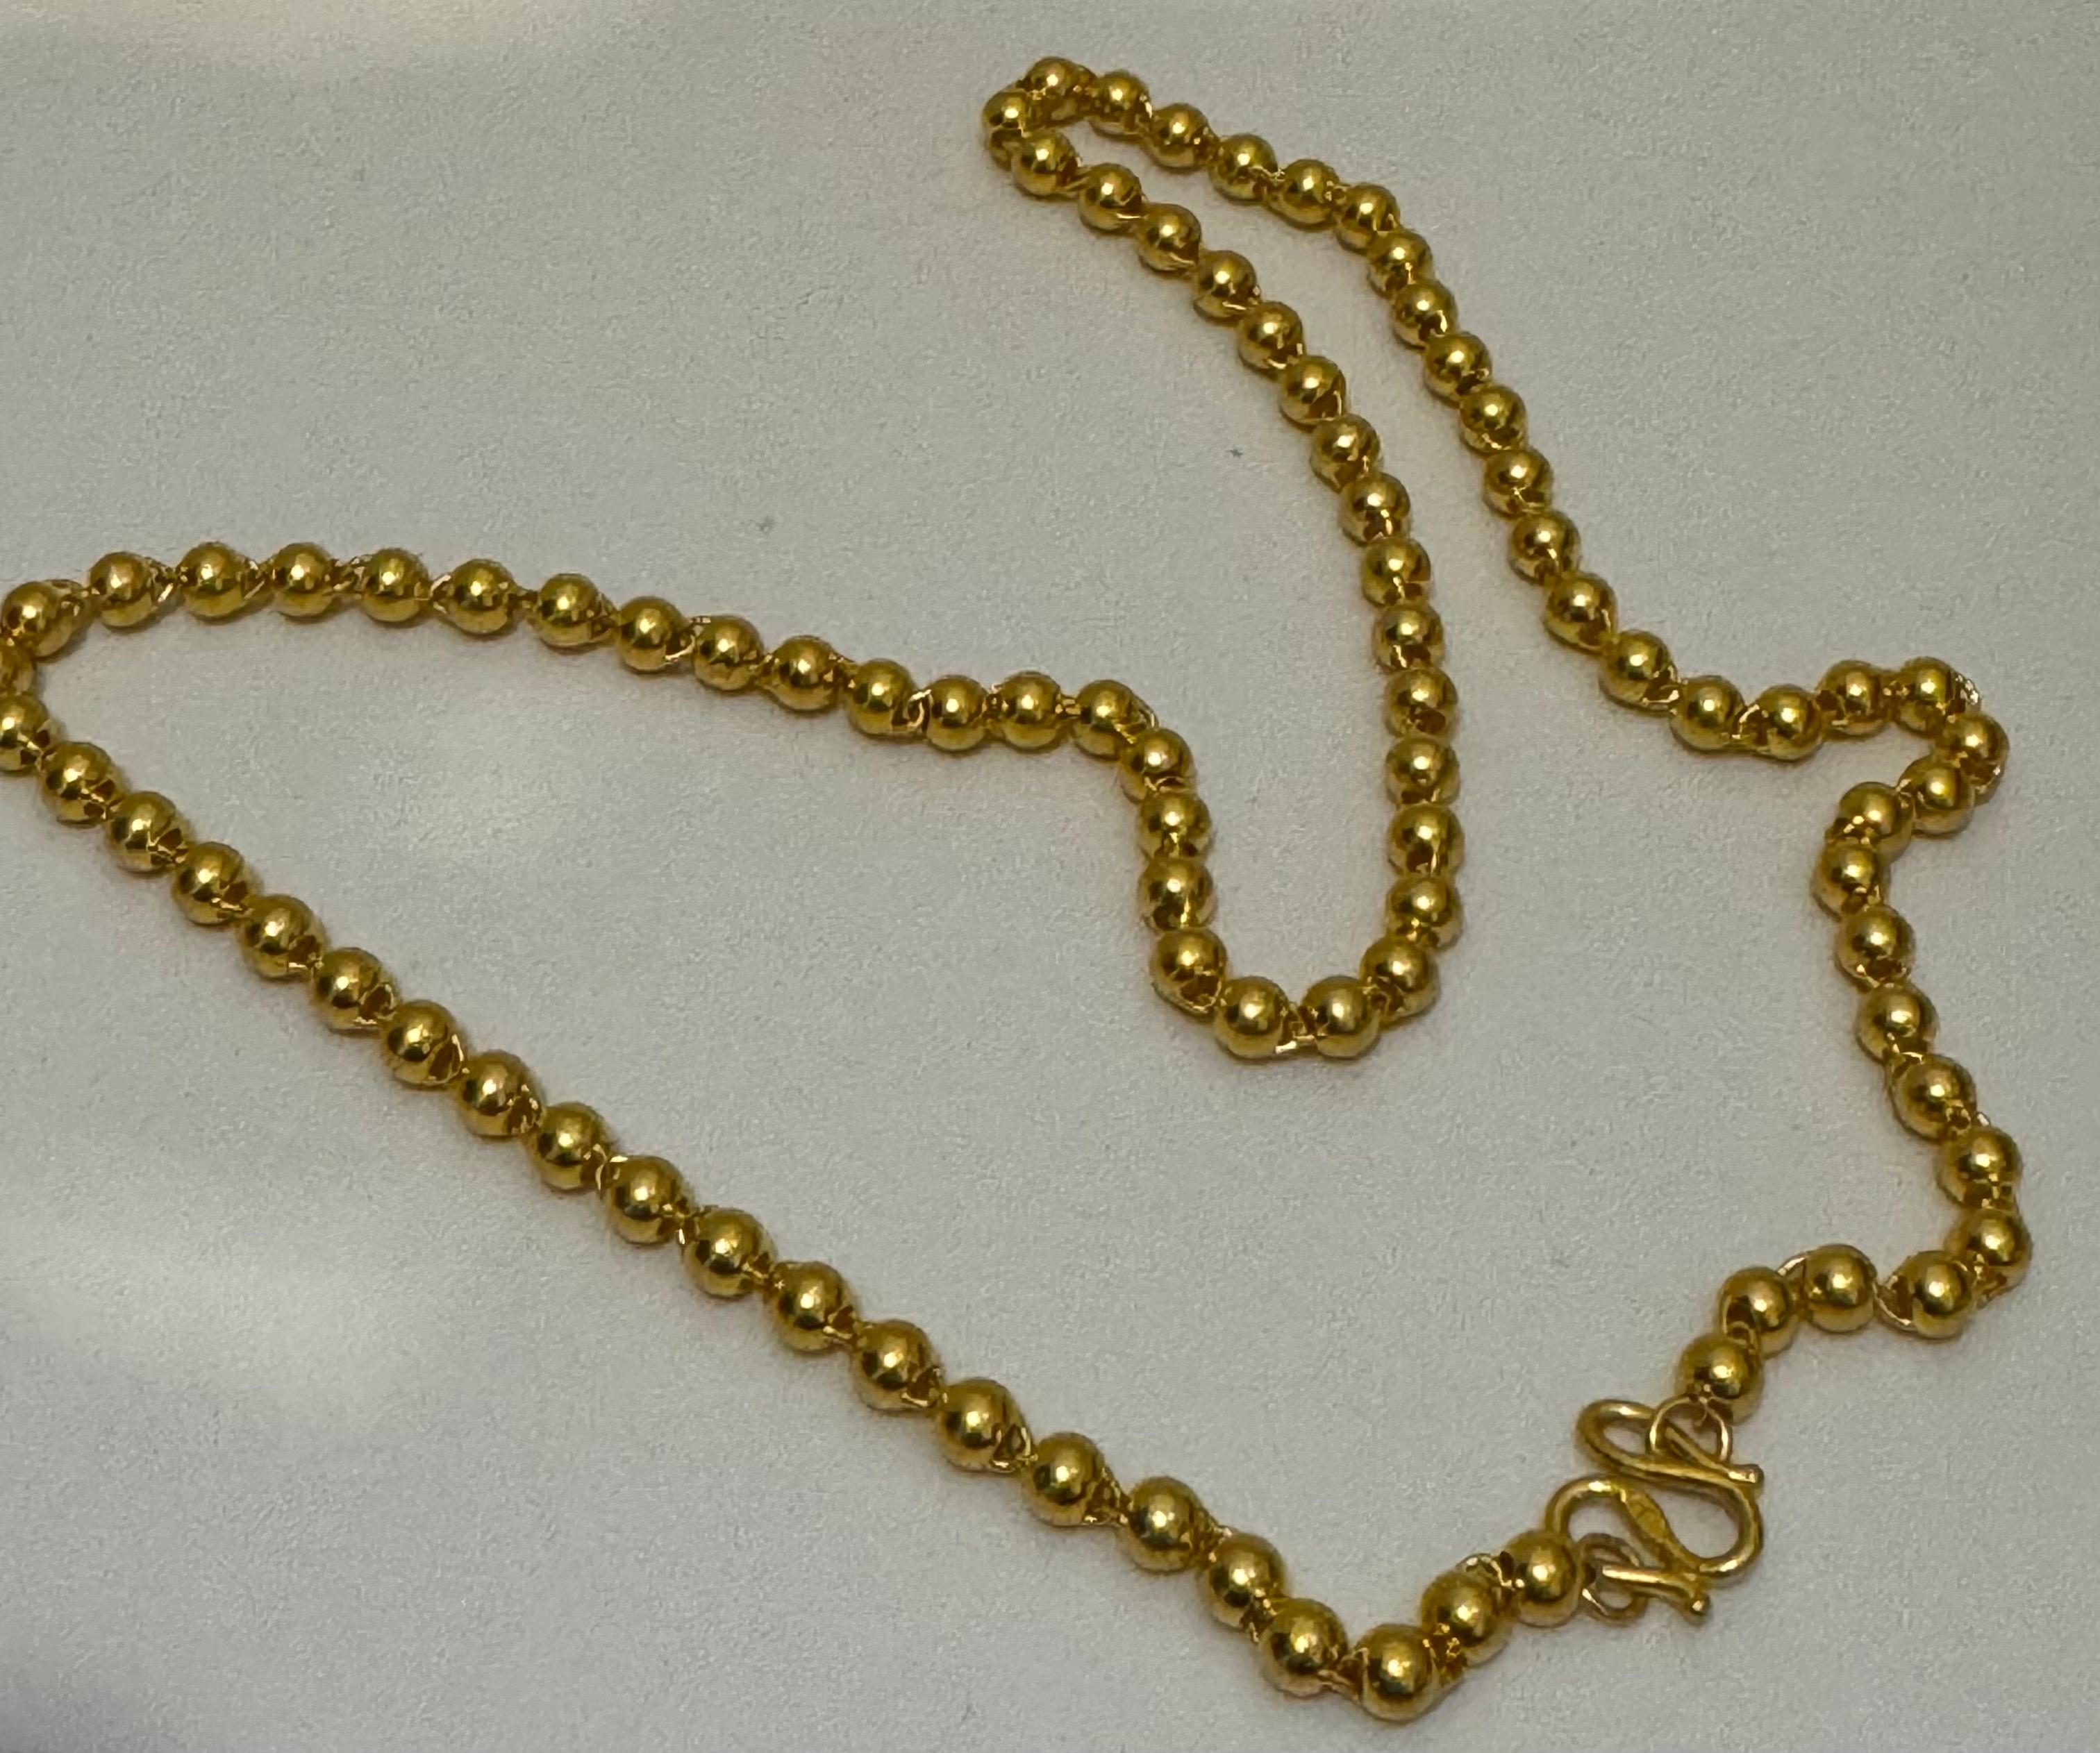 Vintage 19 Gm Pure 24 Karat Yellow Gold Handmade Ball Chain 17 inch long 1